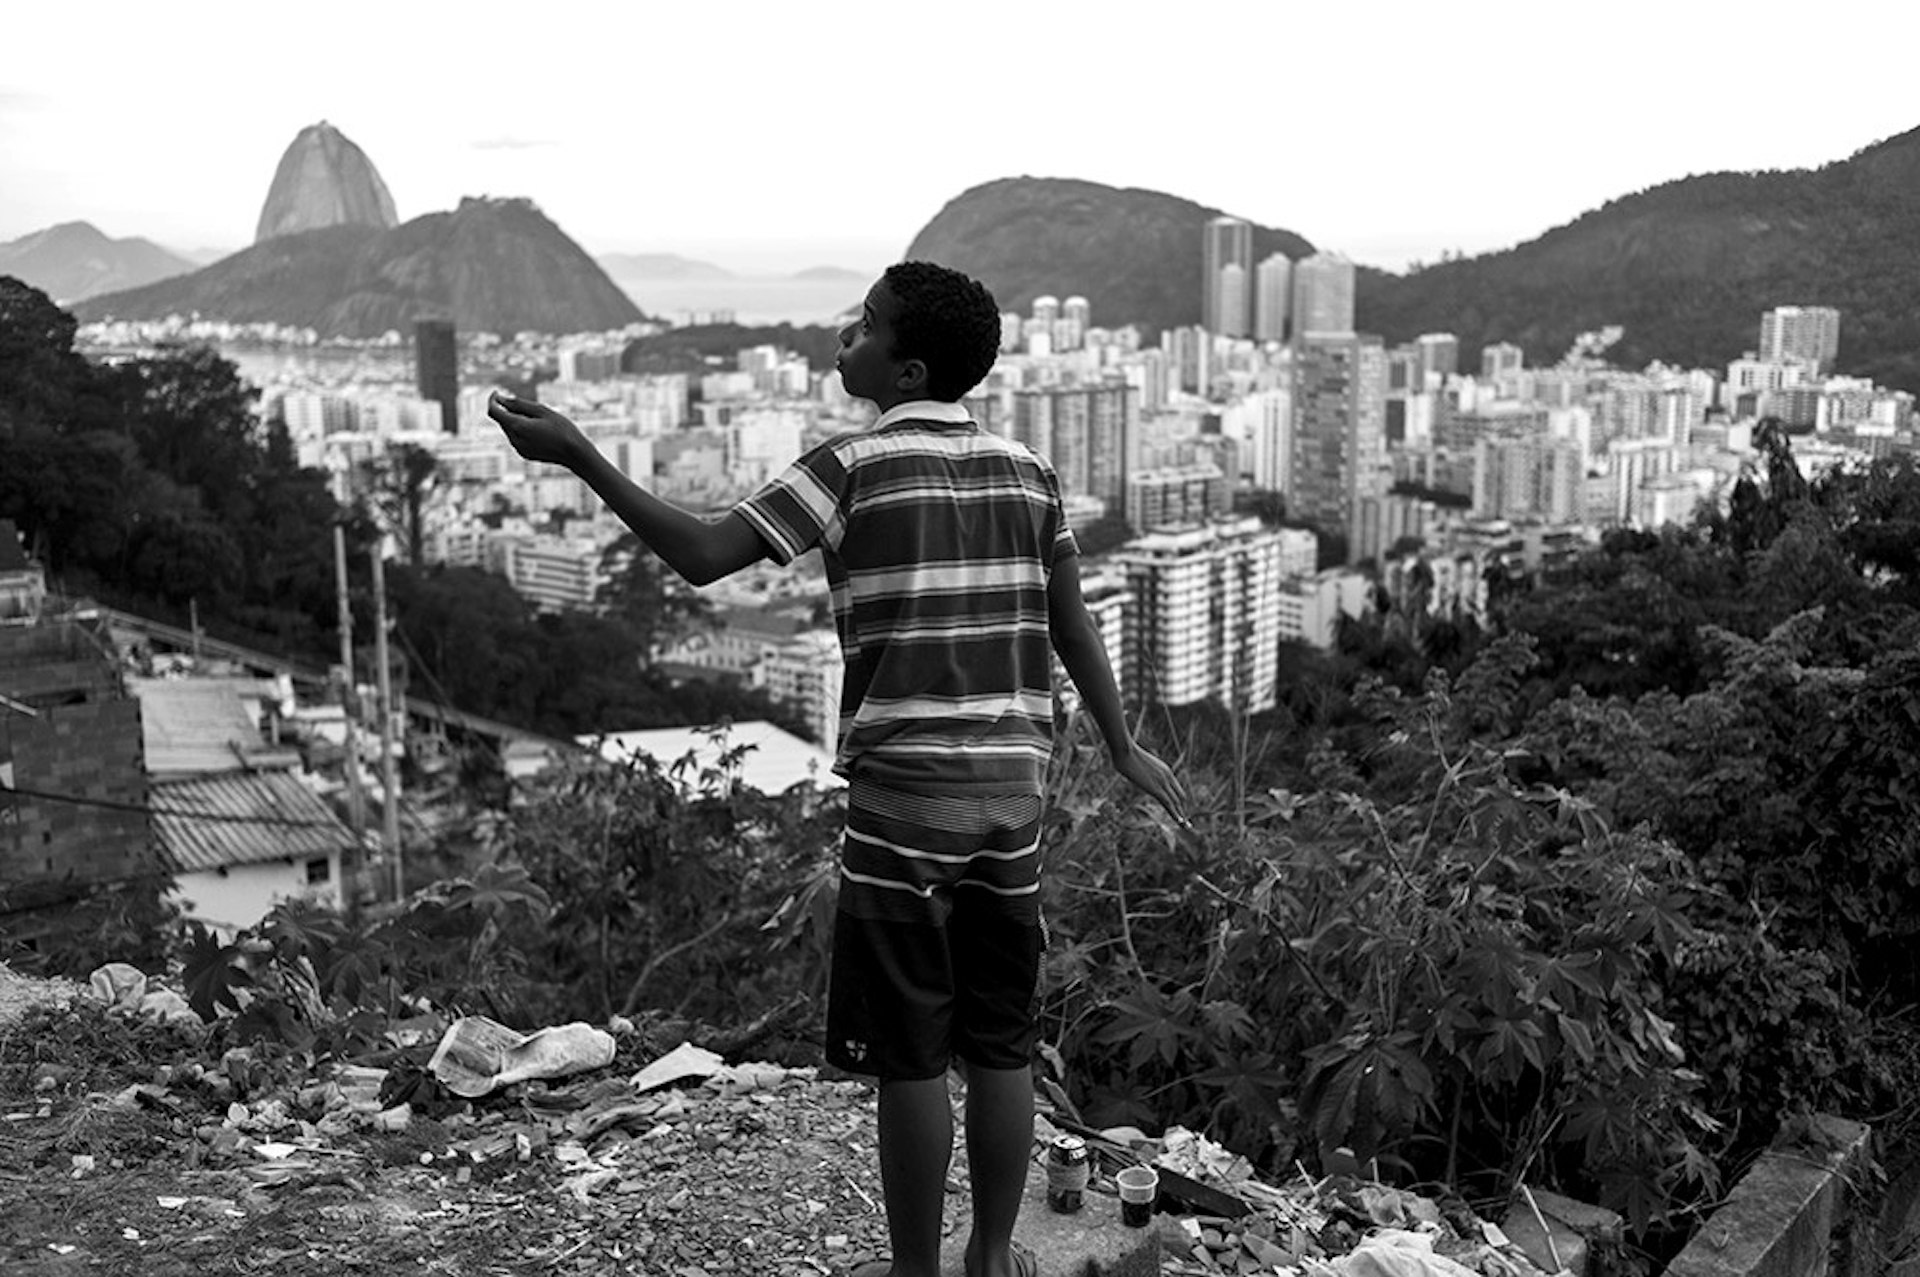 Street photographer Boogie explores the favelas of Rio